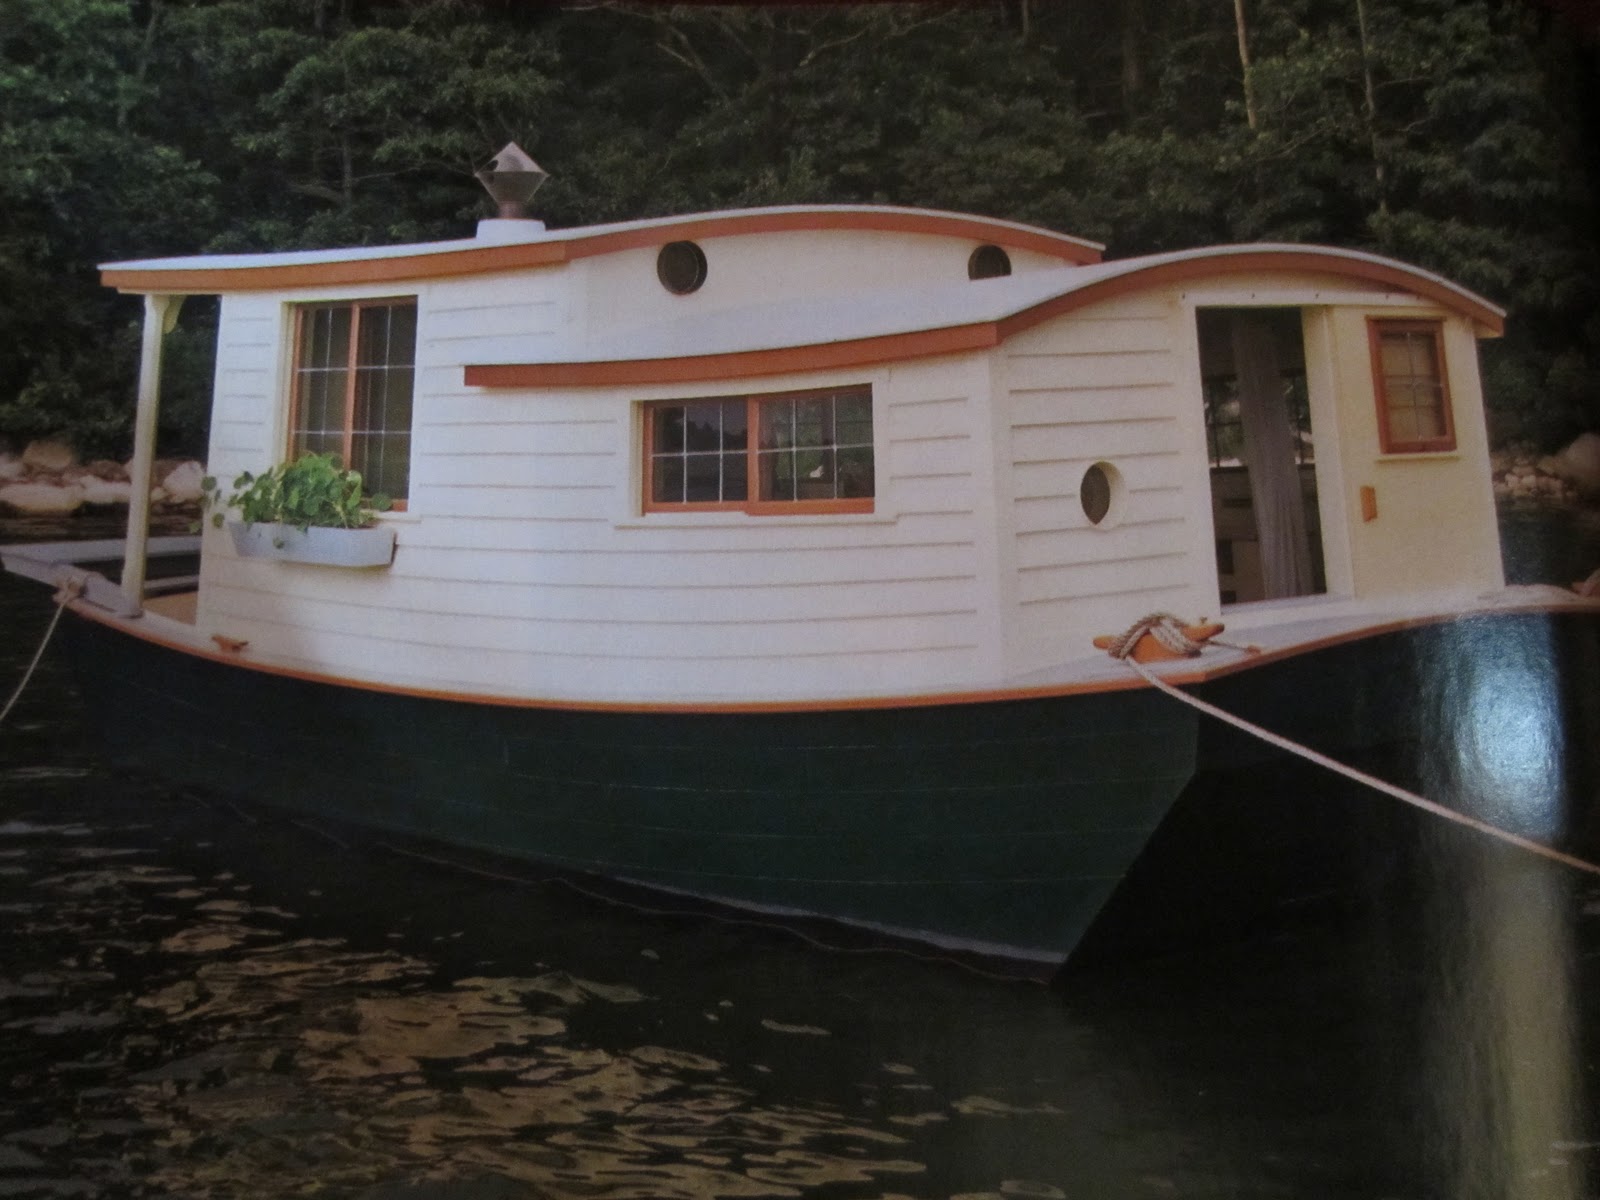  .com: An UNBELIEVABLE Shantyboat/Houseboat in Wooden Boat Magazine